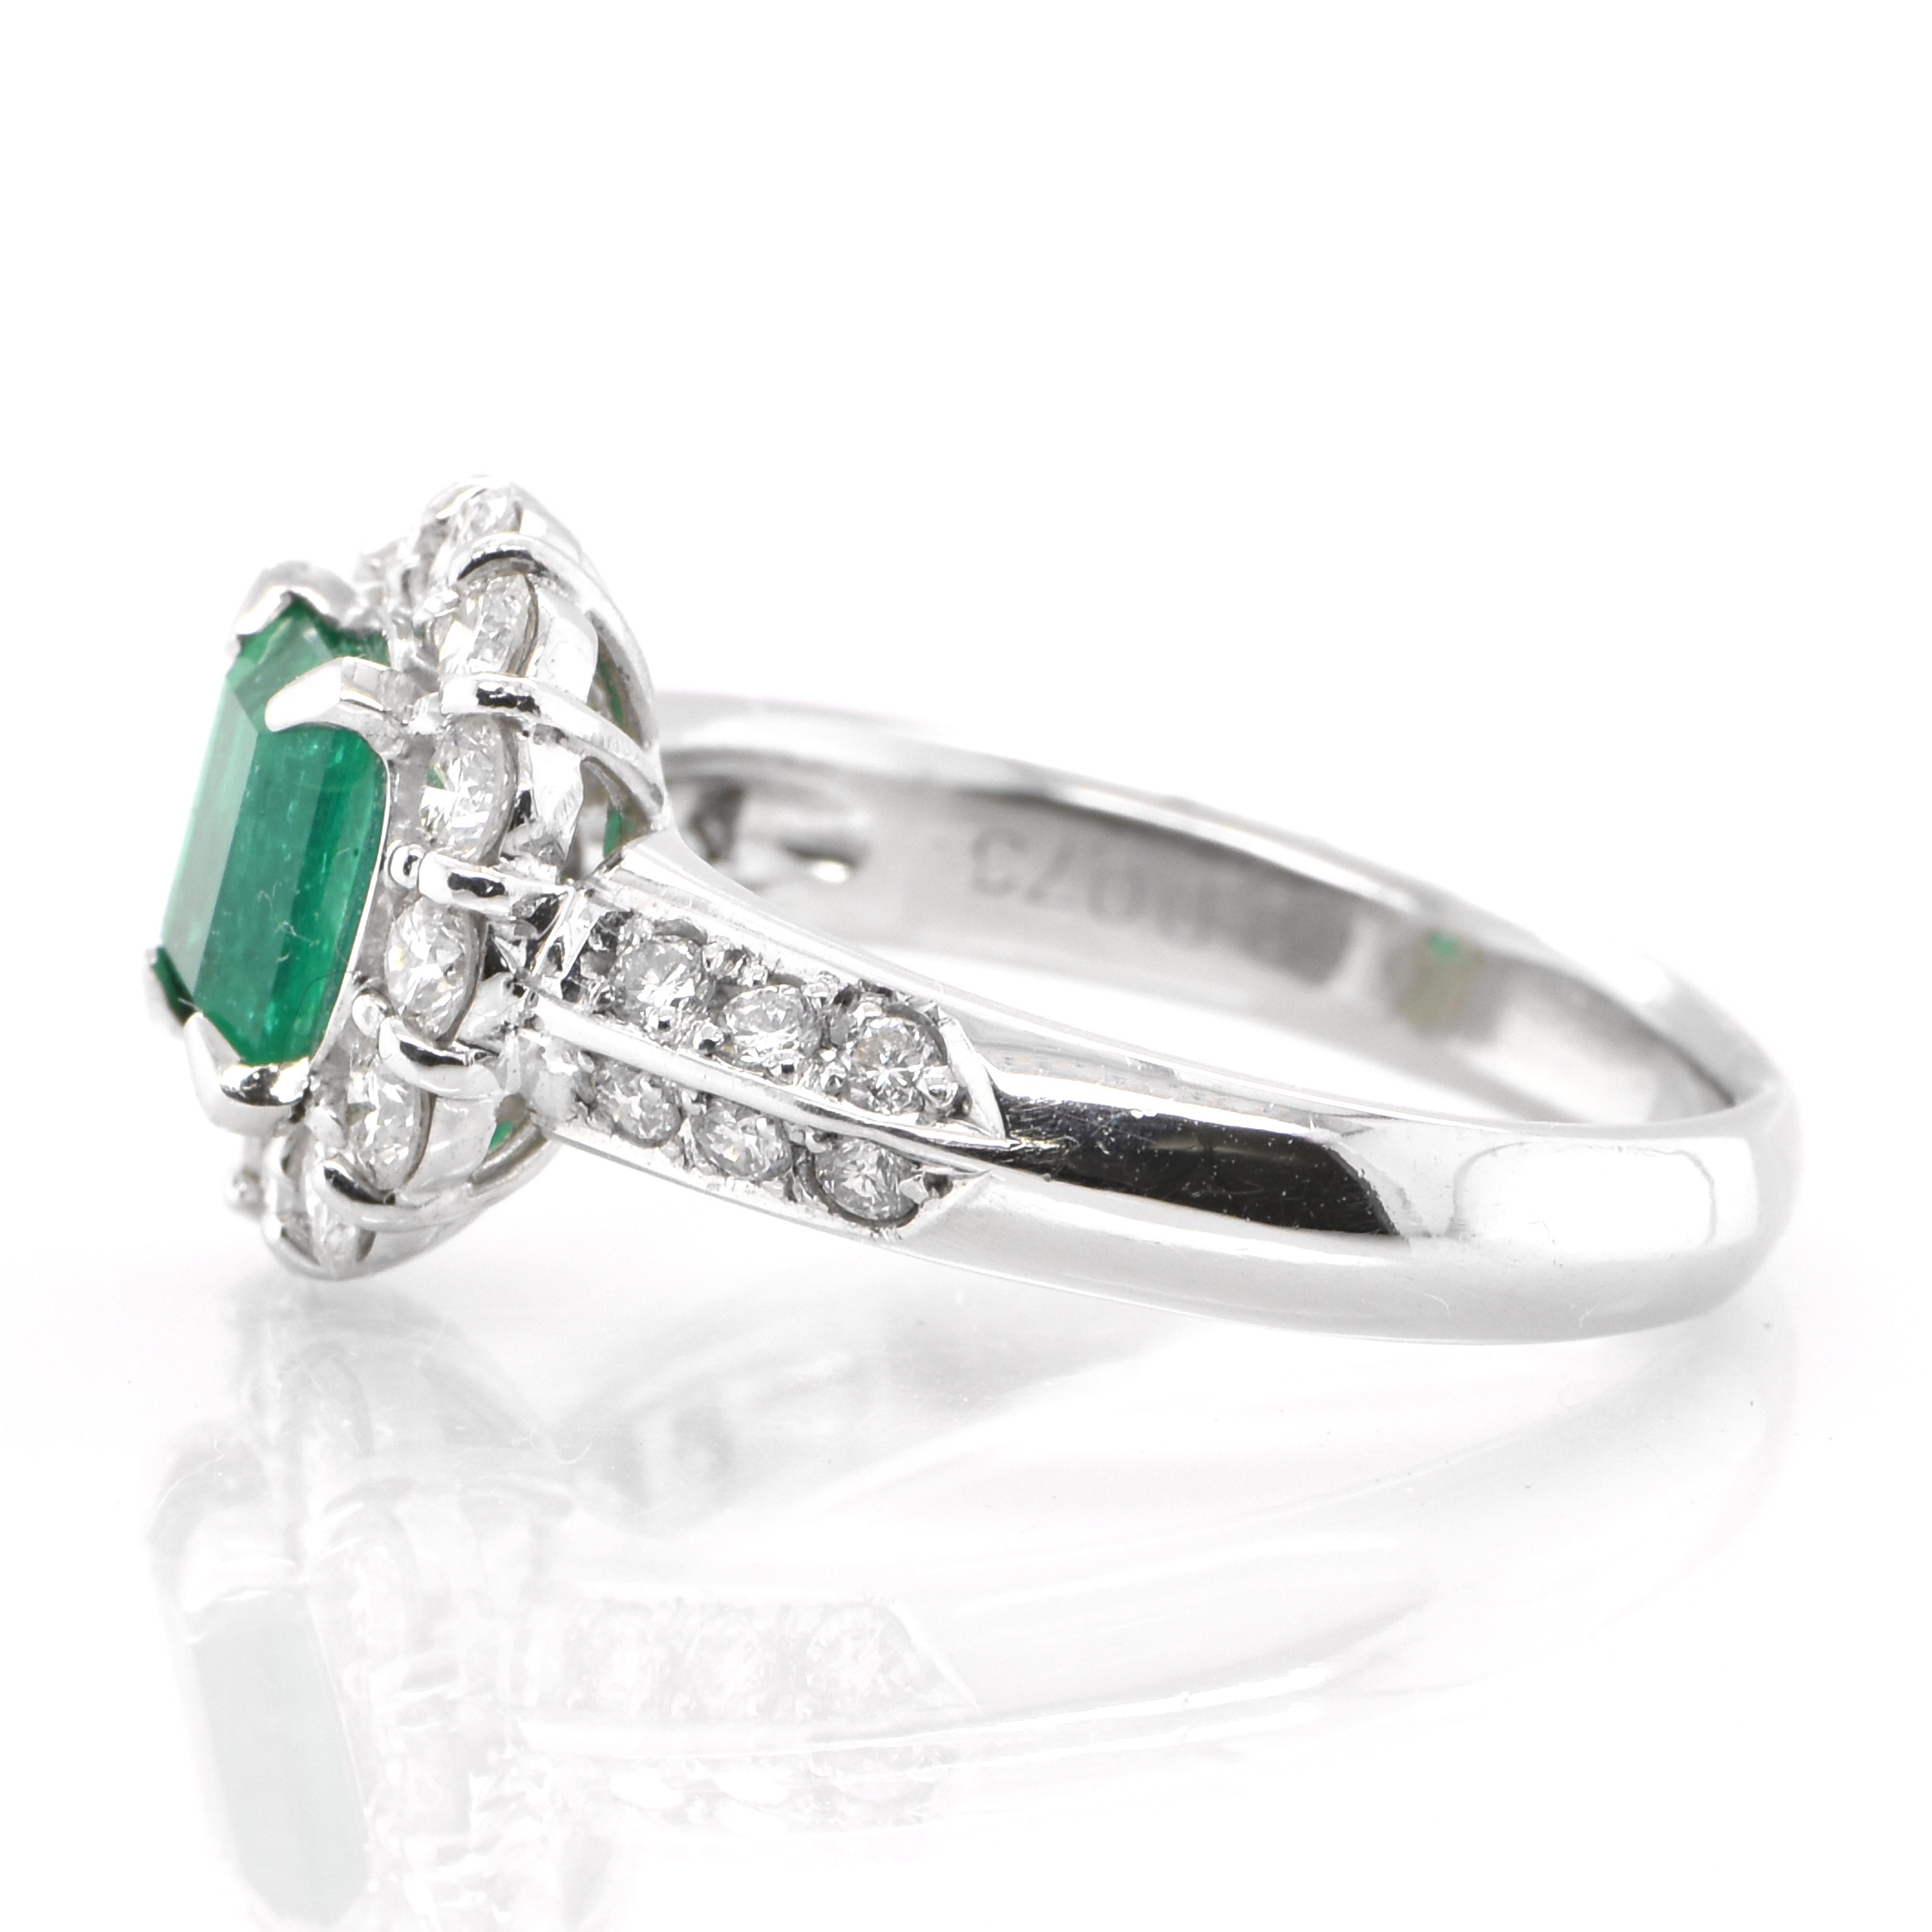 Emerald Cut 0.69 Carat Natural Emerald and Diamond Engagement Ring Set in Platinum